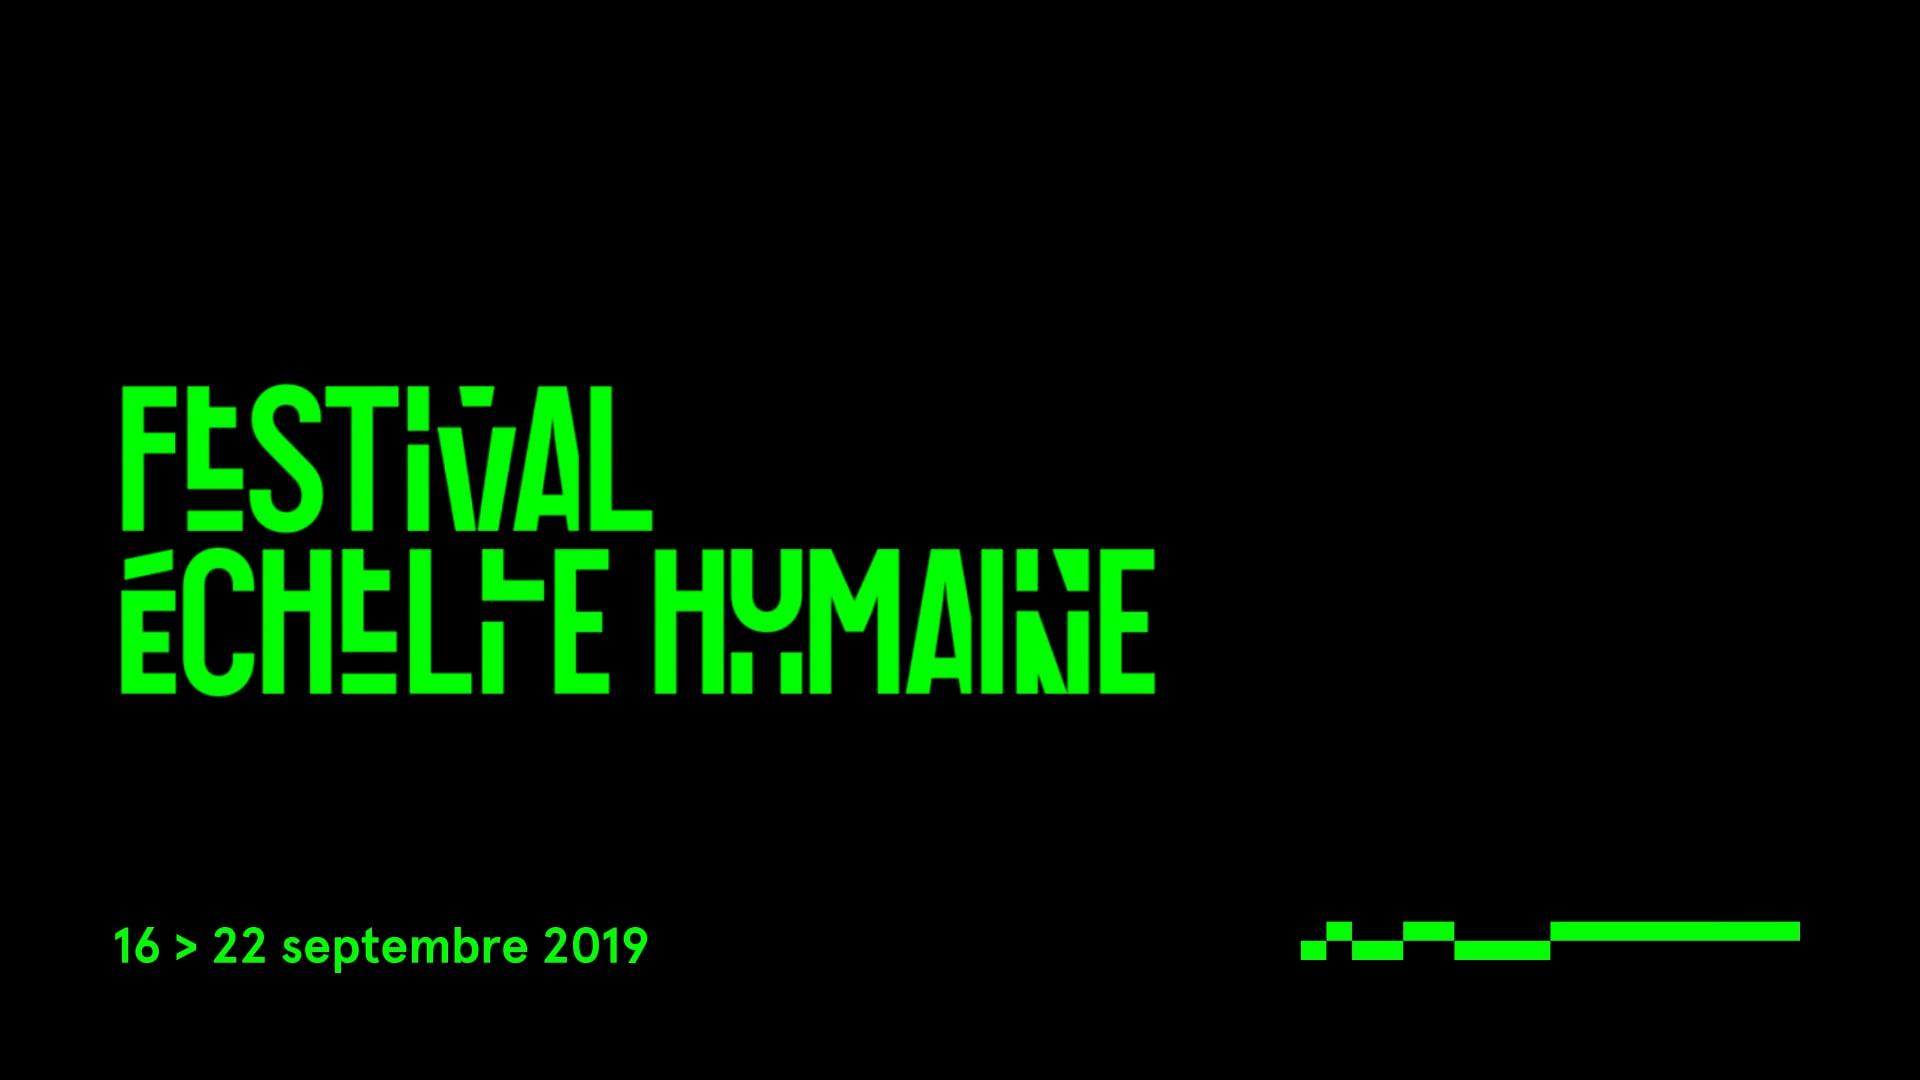 ECHELLE HUMAINE 2019 - FESTIVAL - Yasmine Hugonnet - LAFAYETTE ANTICIPATIONS